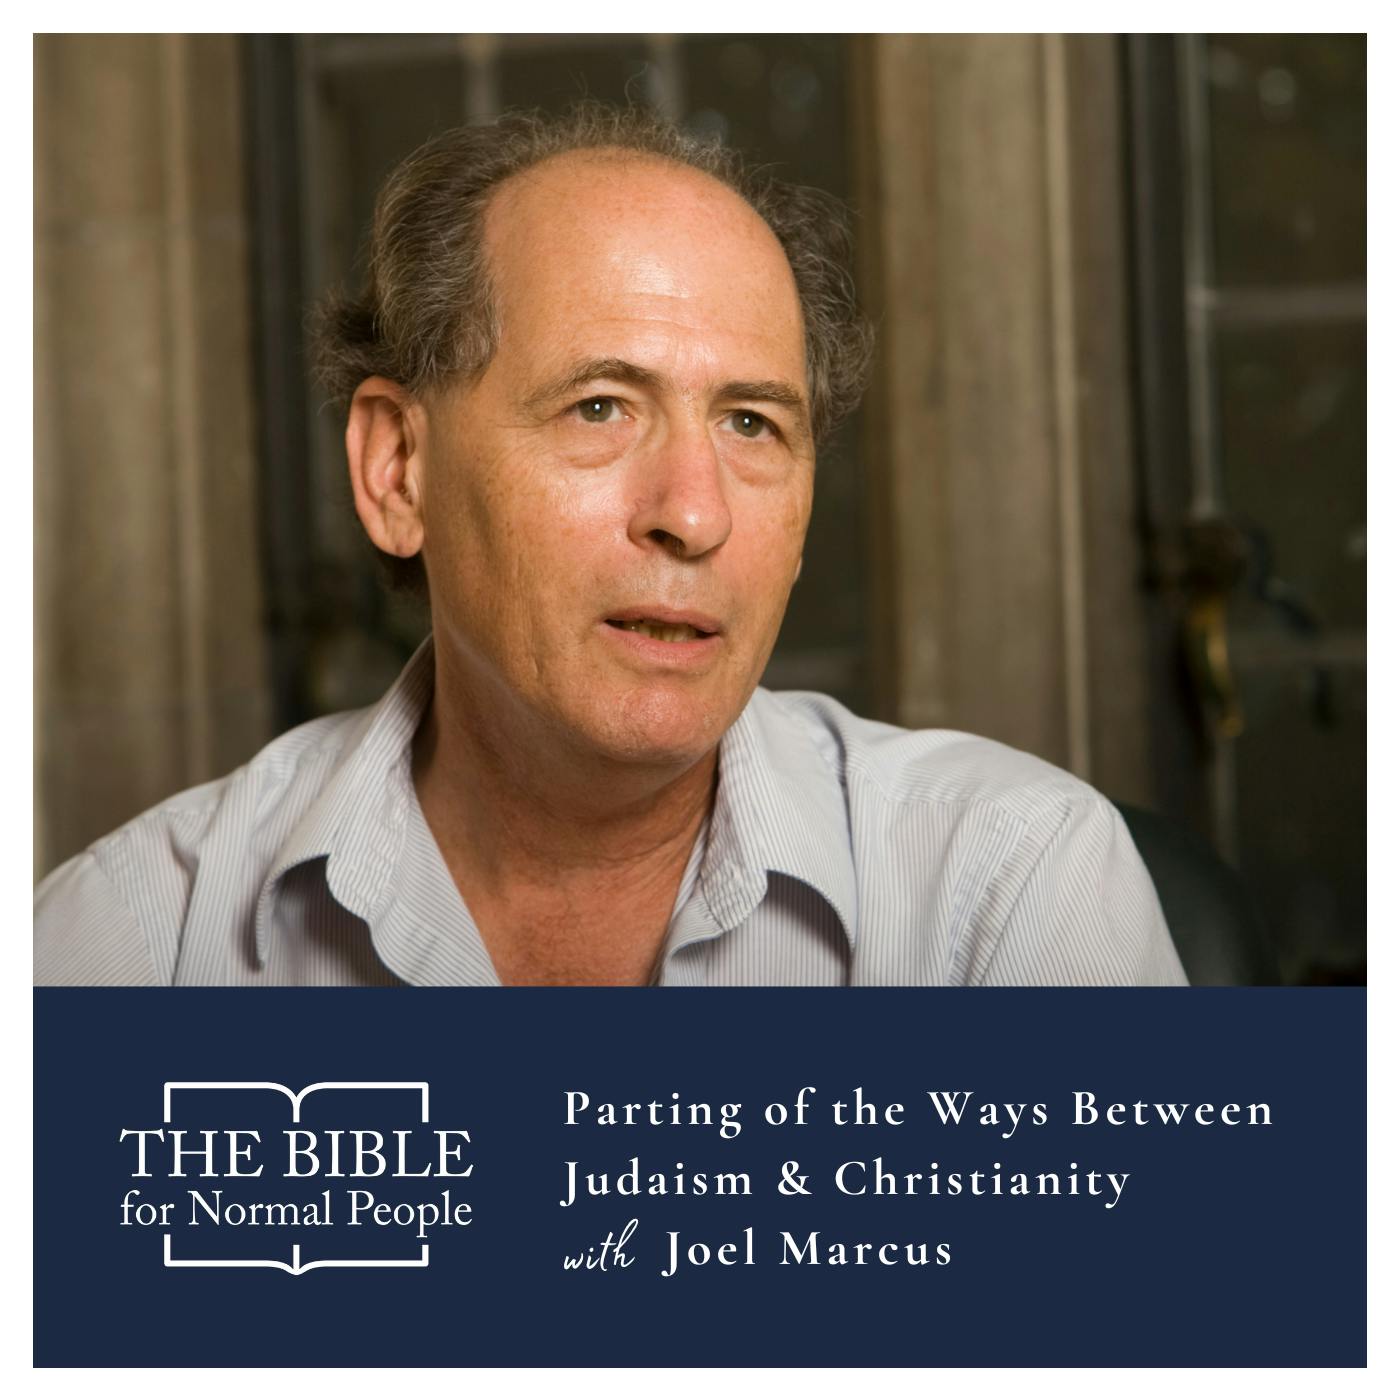 Episode 229: Joel Marcus - Parting of the Ways Between Judaism & Christianity